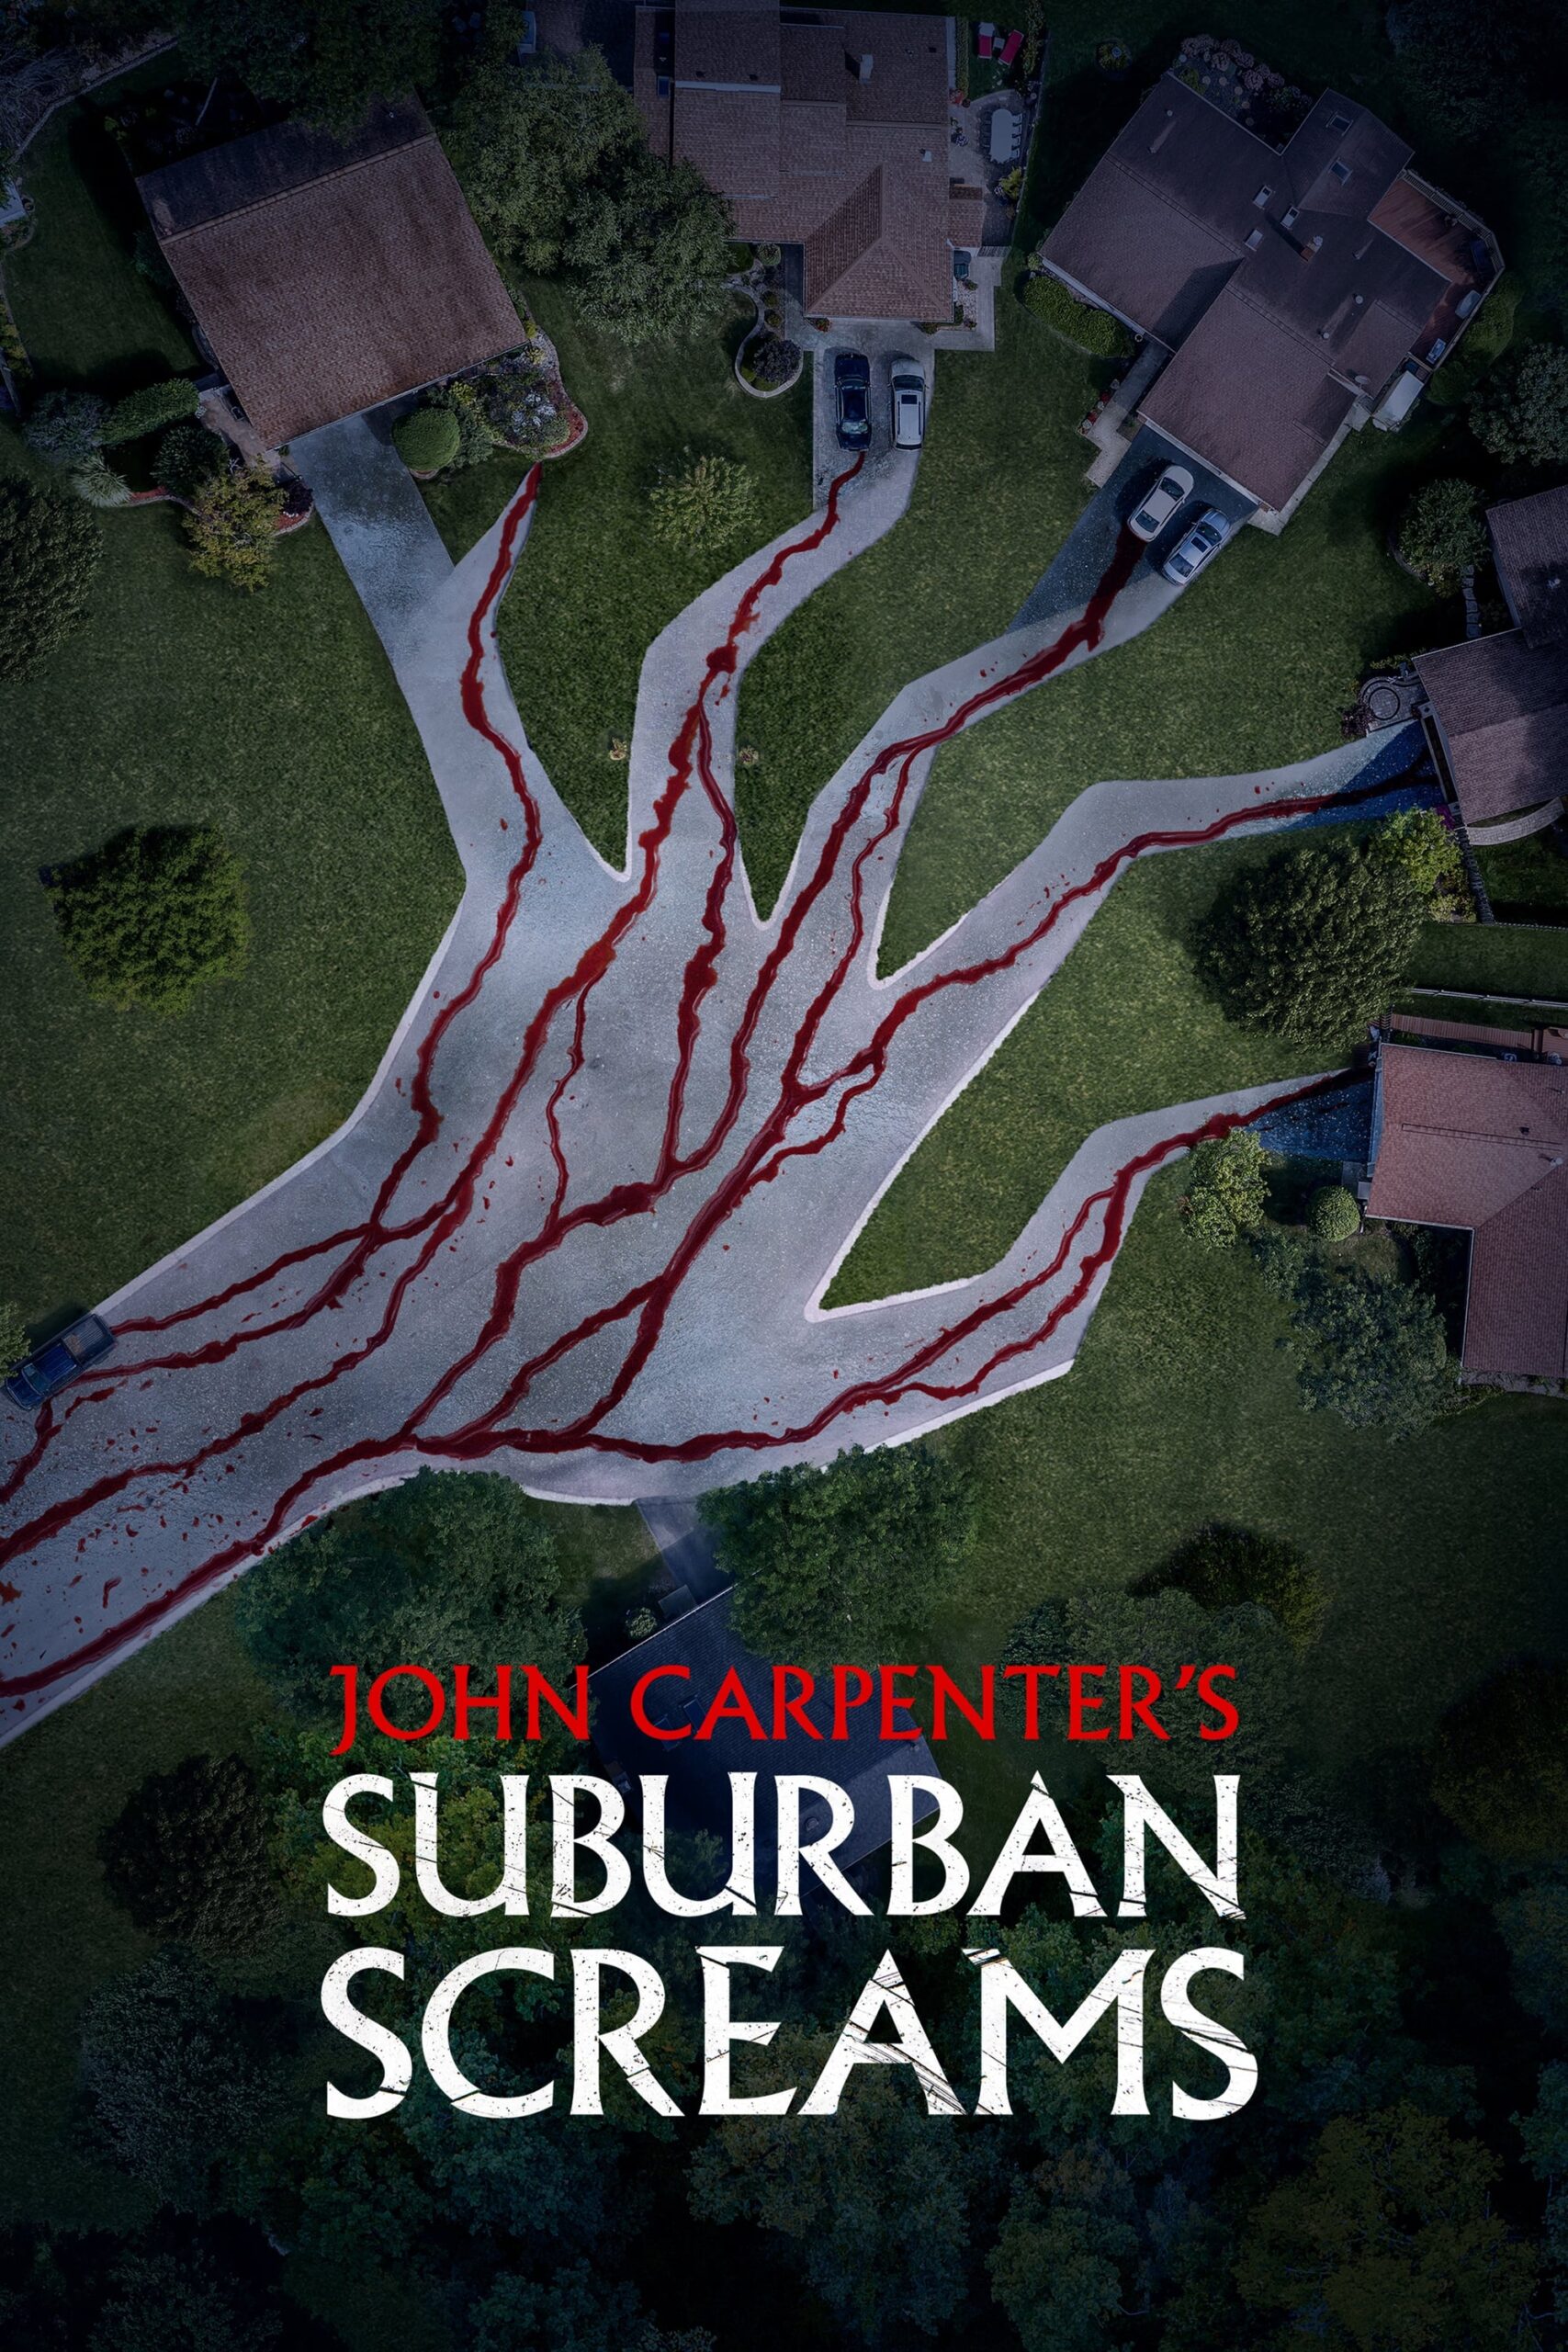 John Carpenter’s Suburban Screams